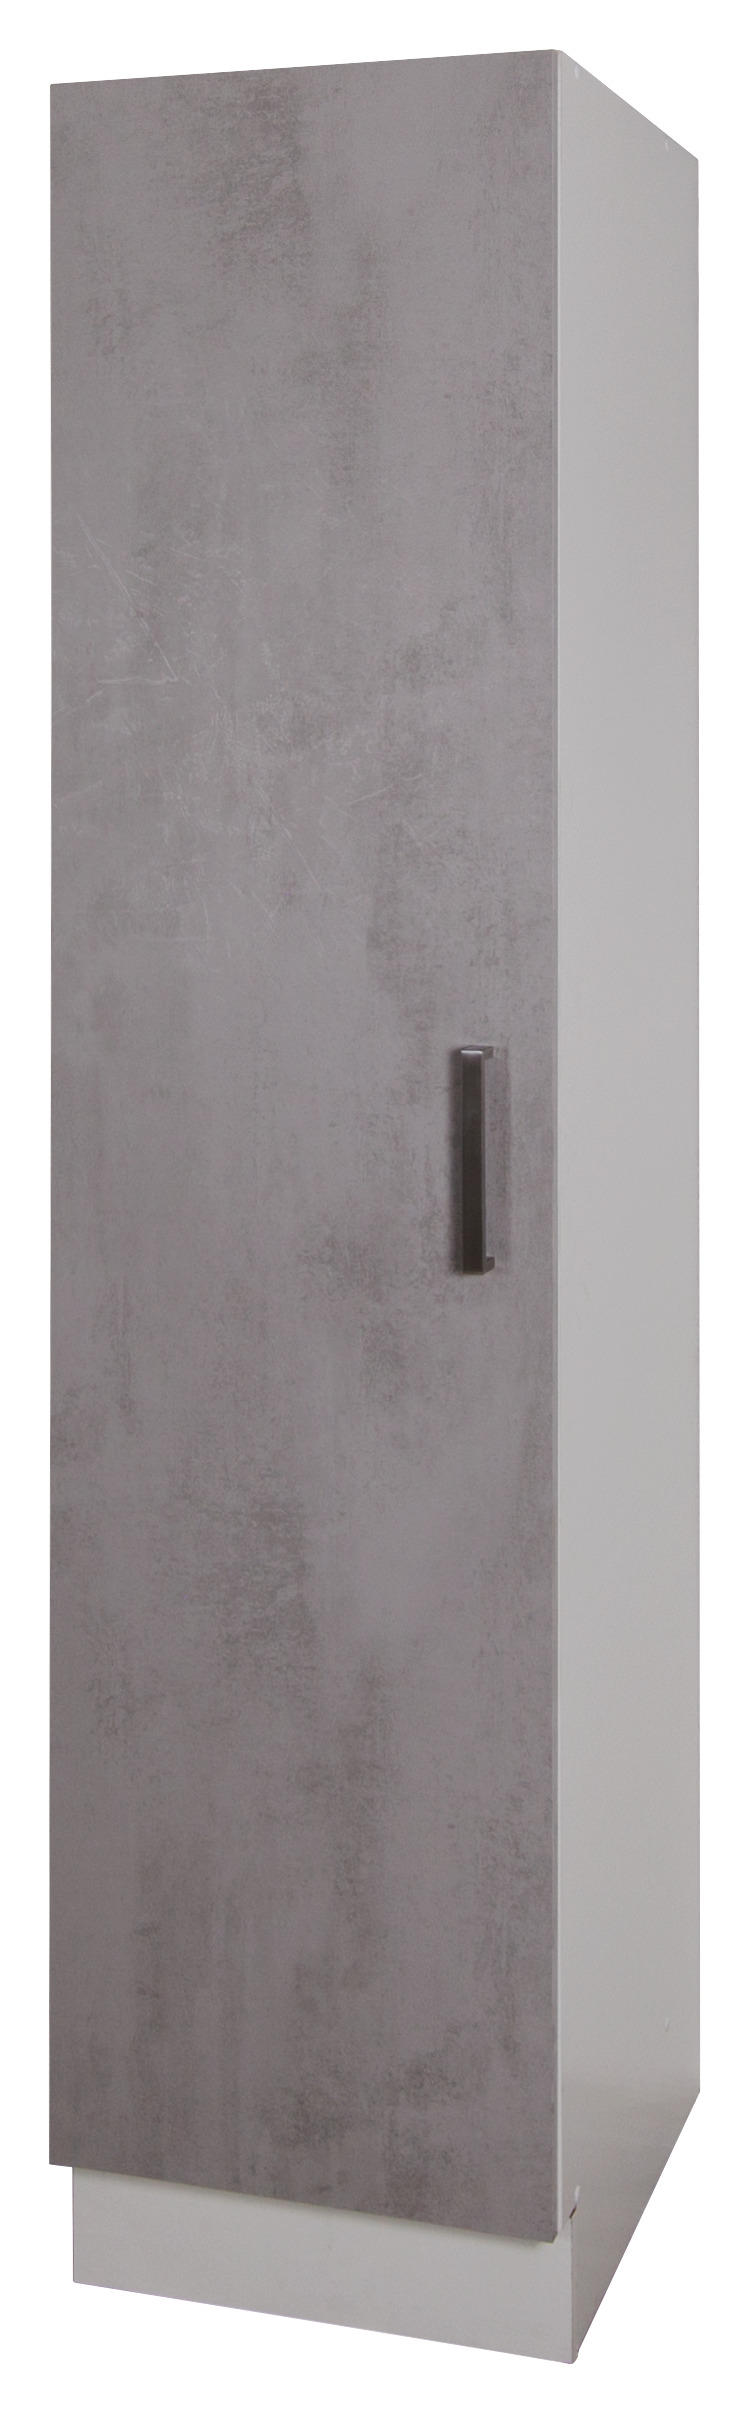 Seitenschrank Mara Beton Optik B/H/T: ca. 50x200x60 cm Mara - weiß/silber (50,00/200,00/60,00cm)